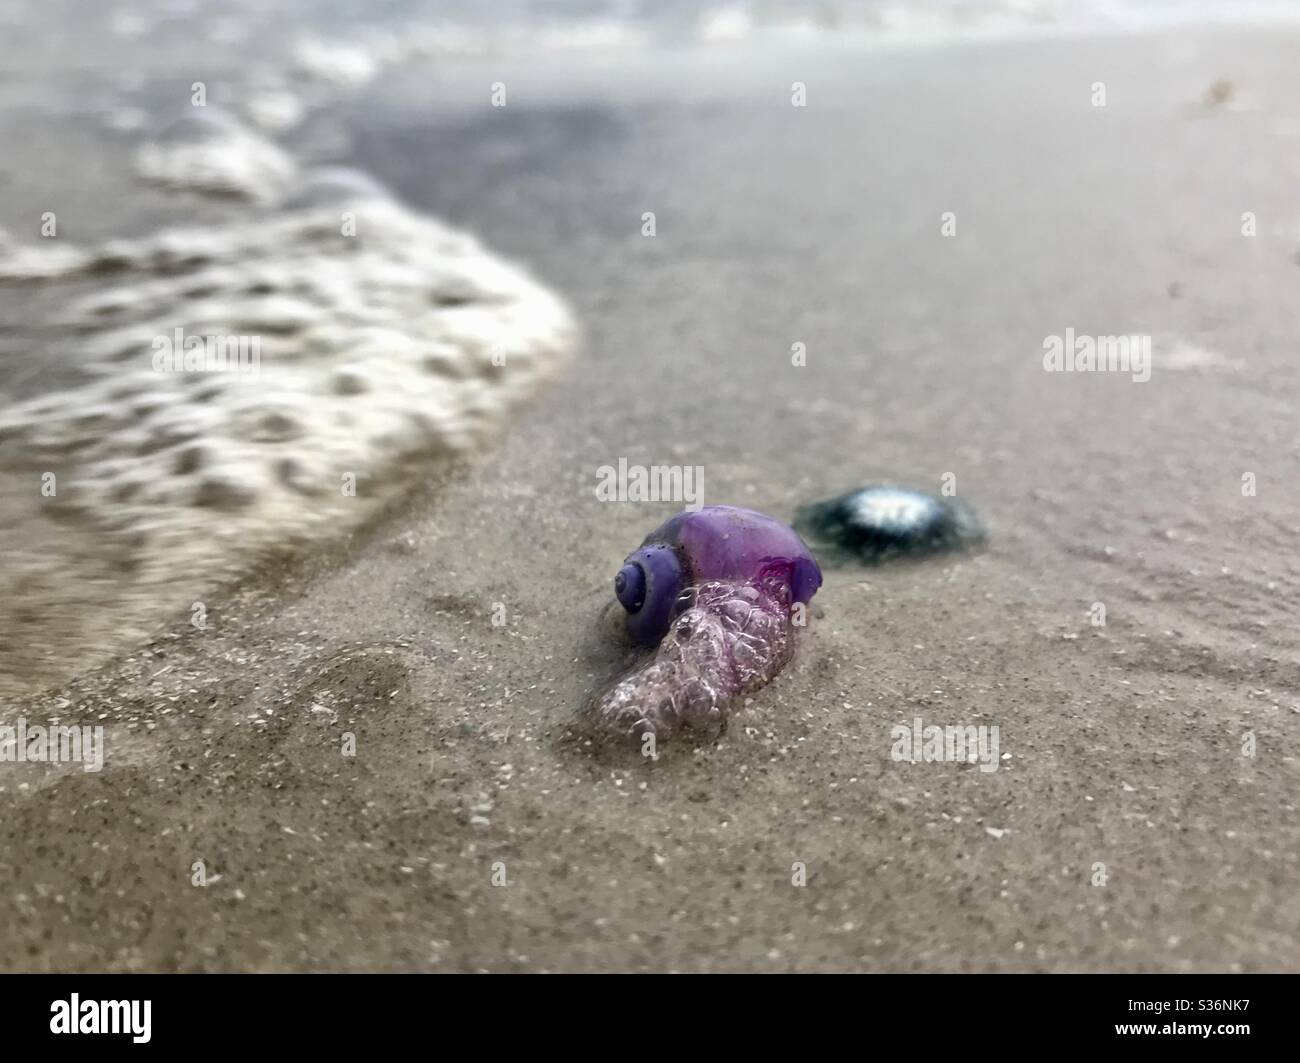 Violet snail on beach Stock Photo